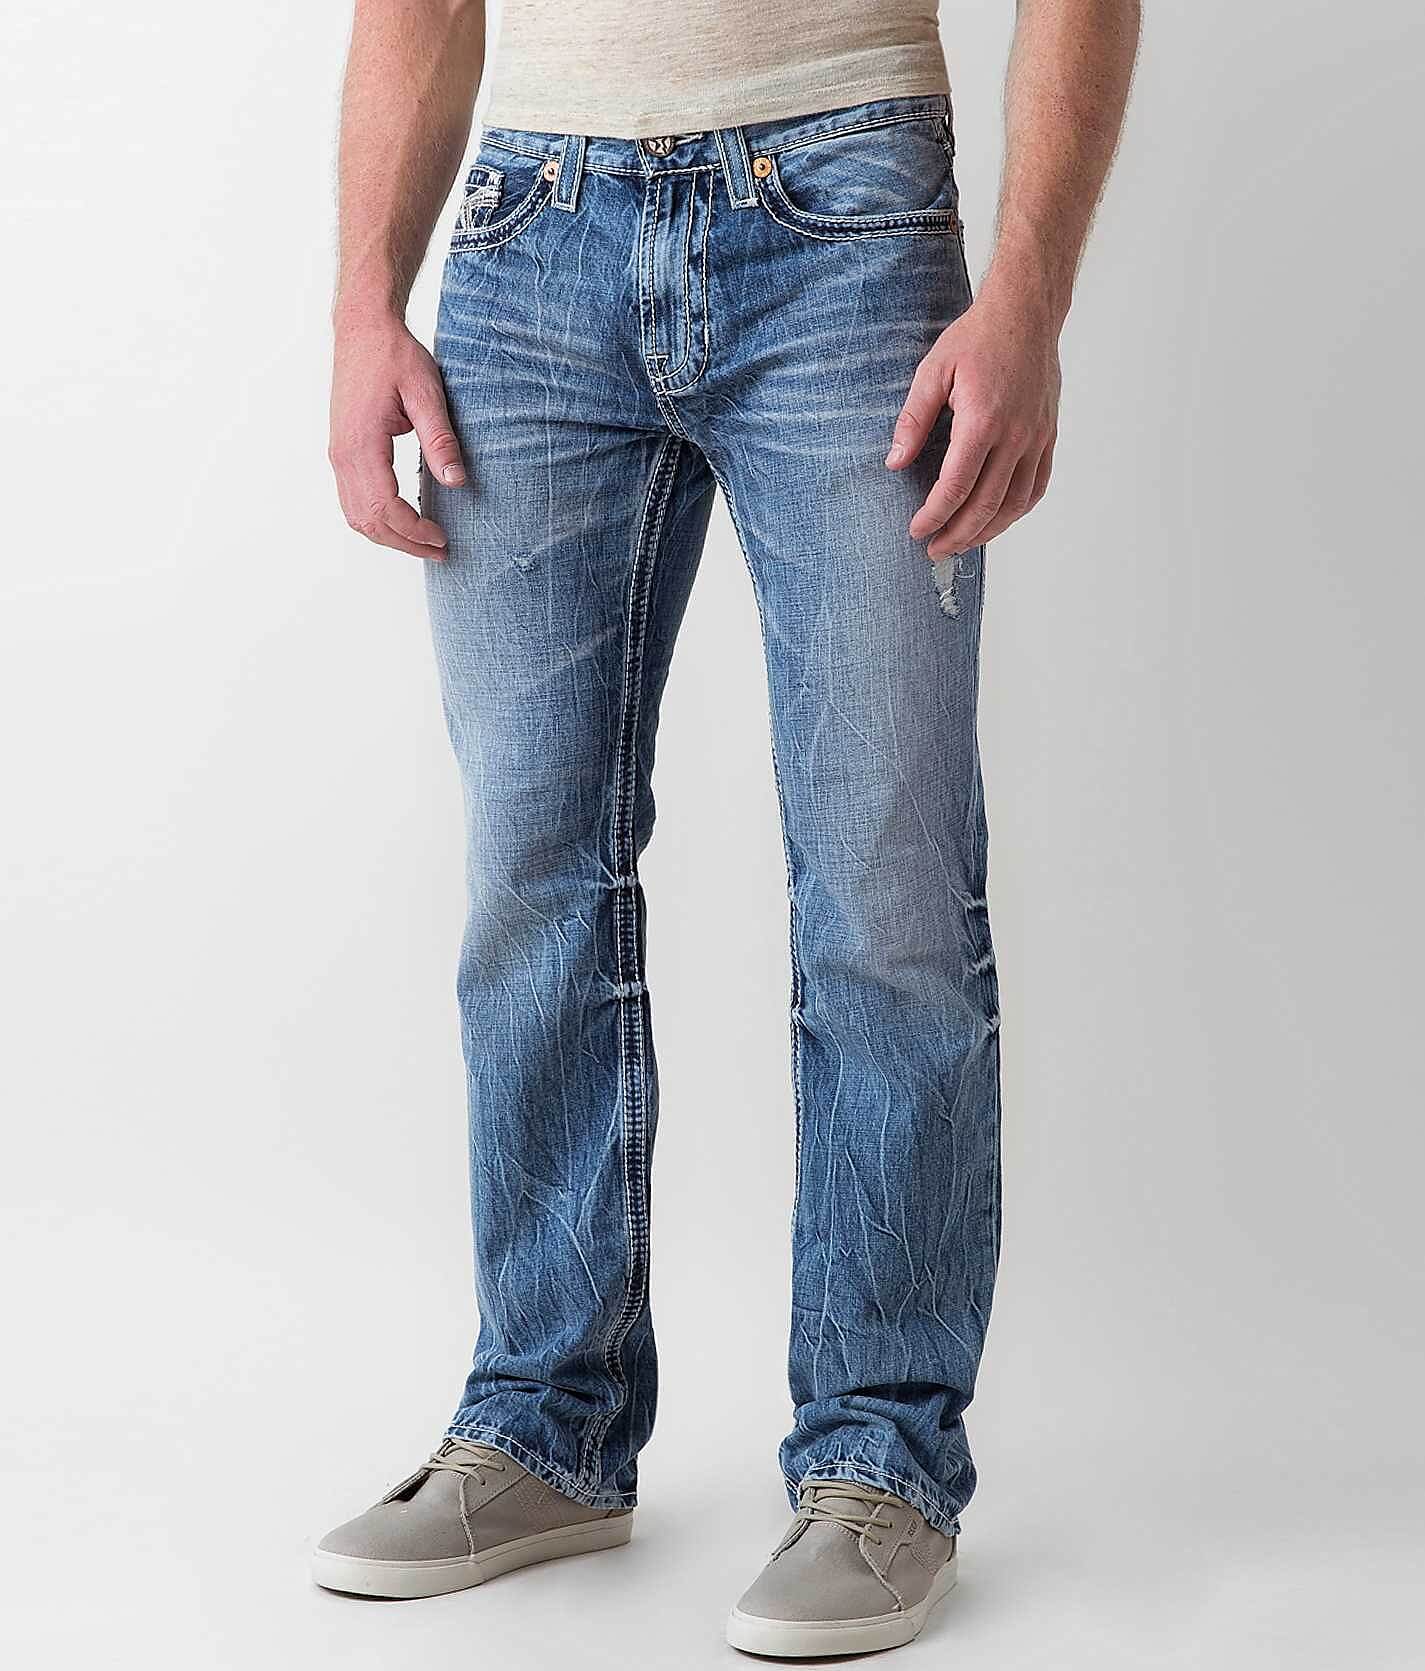 big star union regular straight jeans